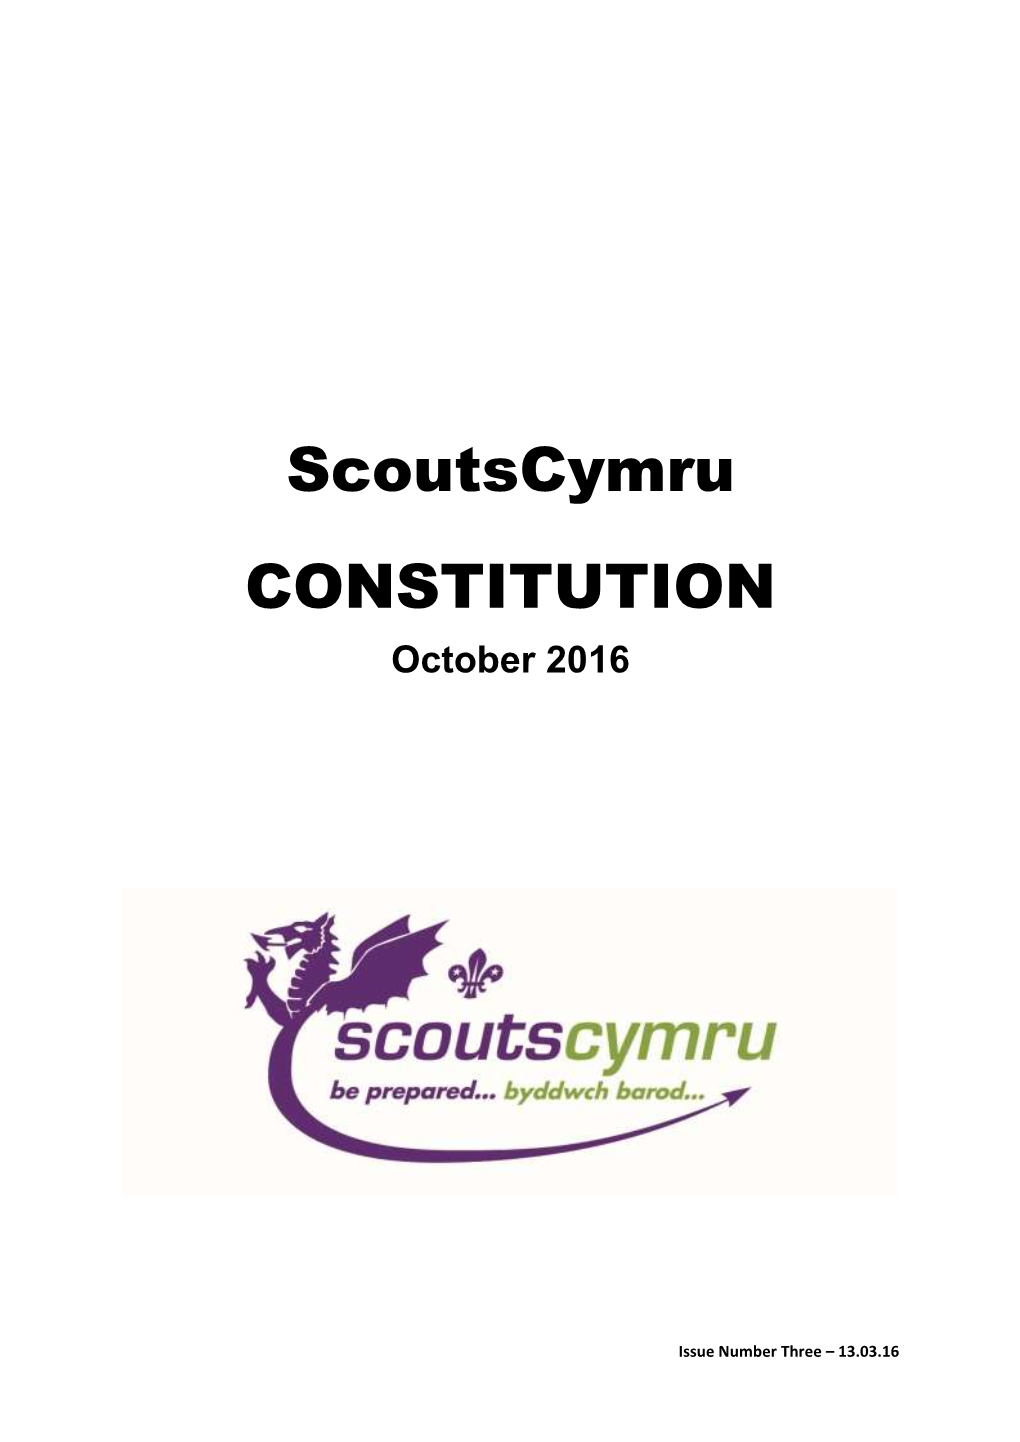 Scoutscymru Constitution - Version History